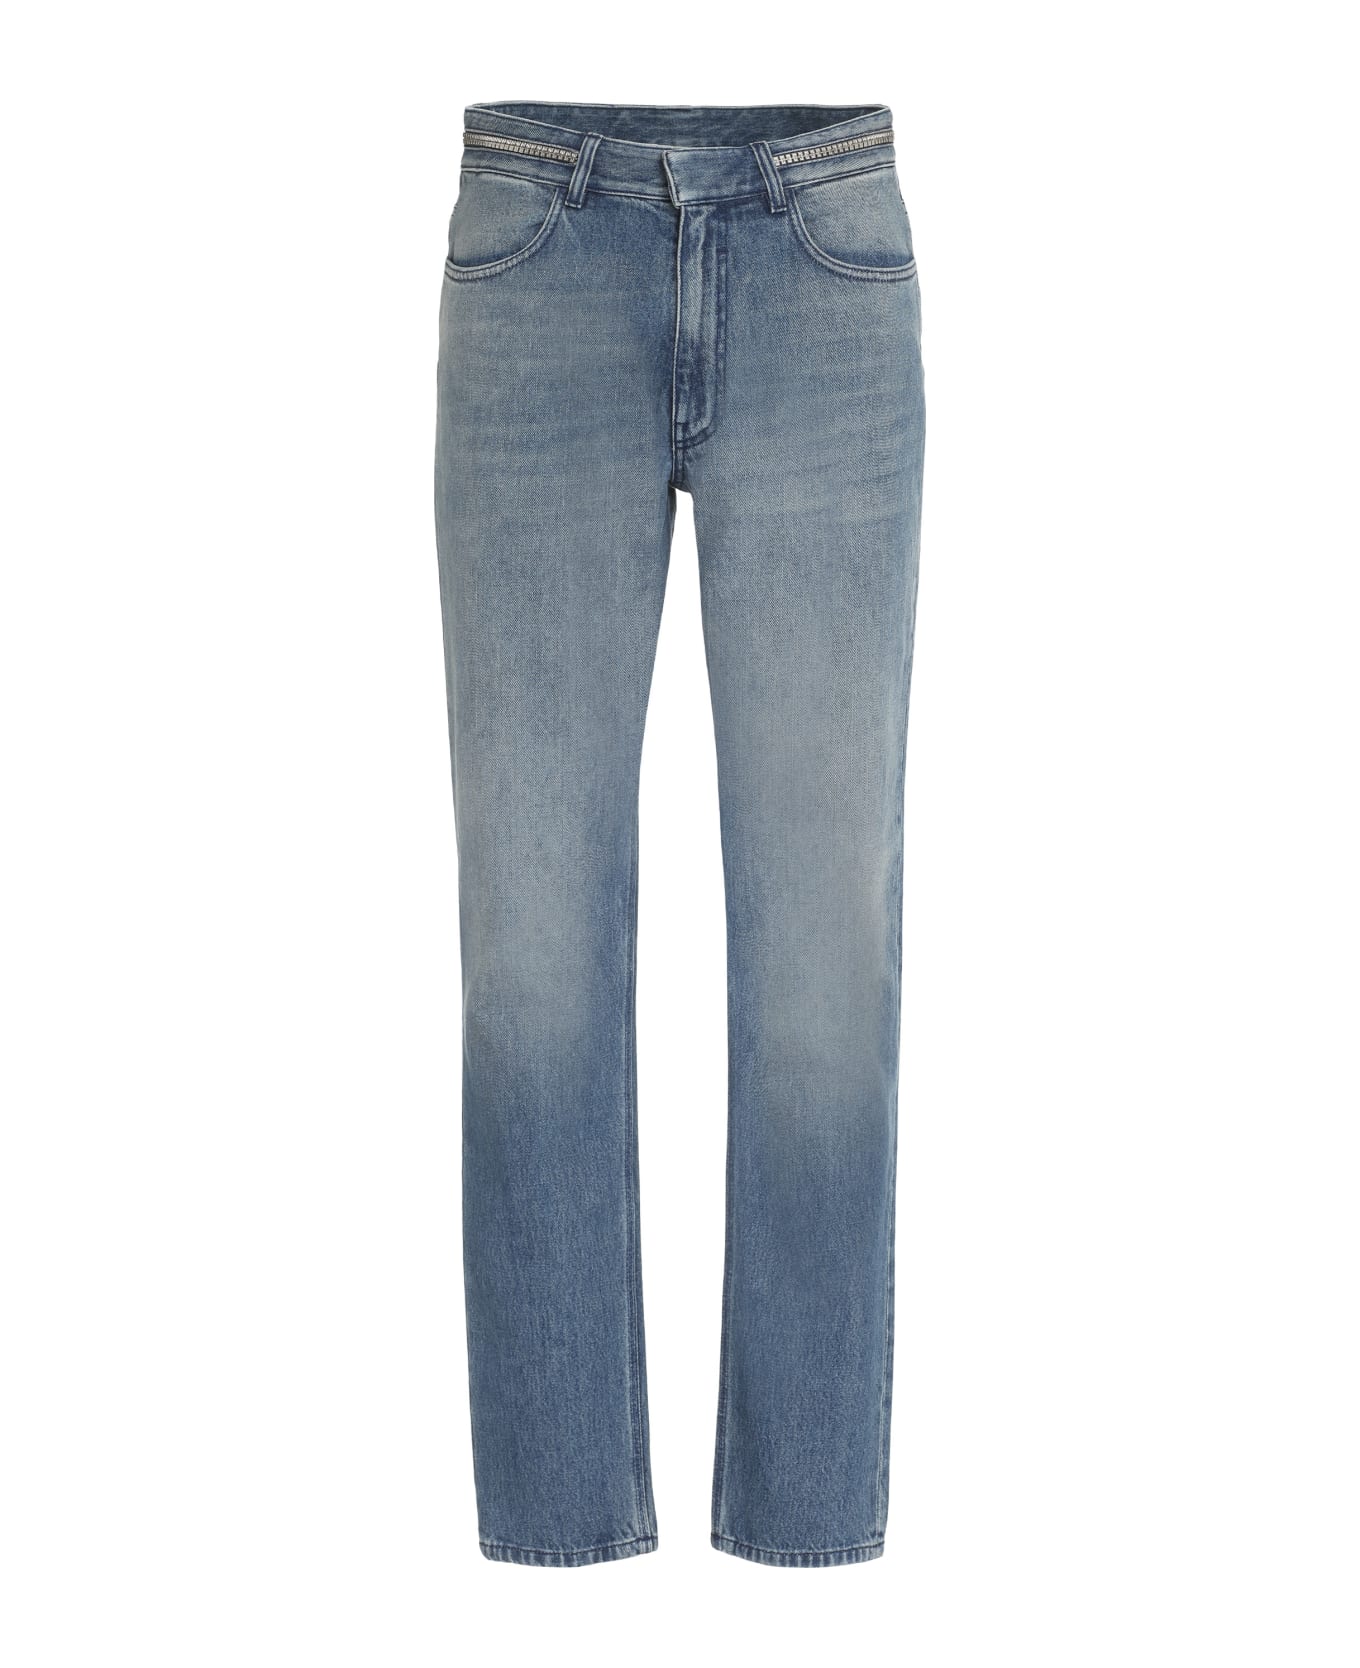 Givenchy Slim Fit Jeans - Denim